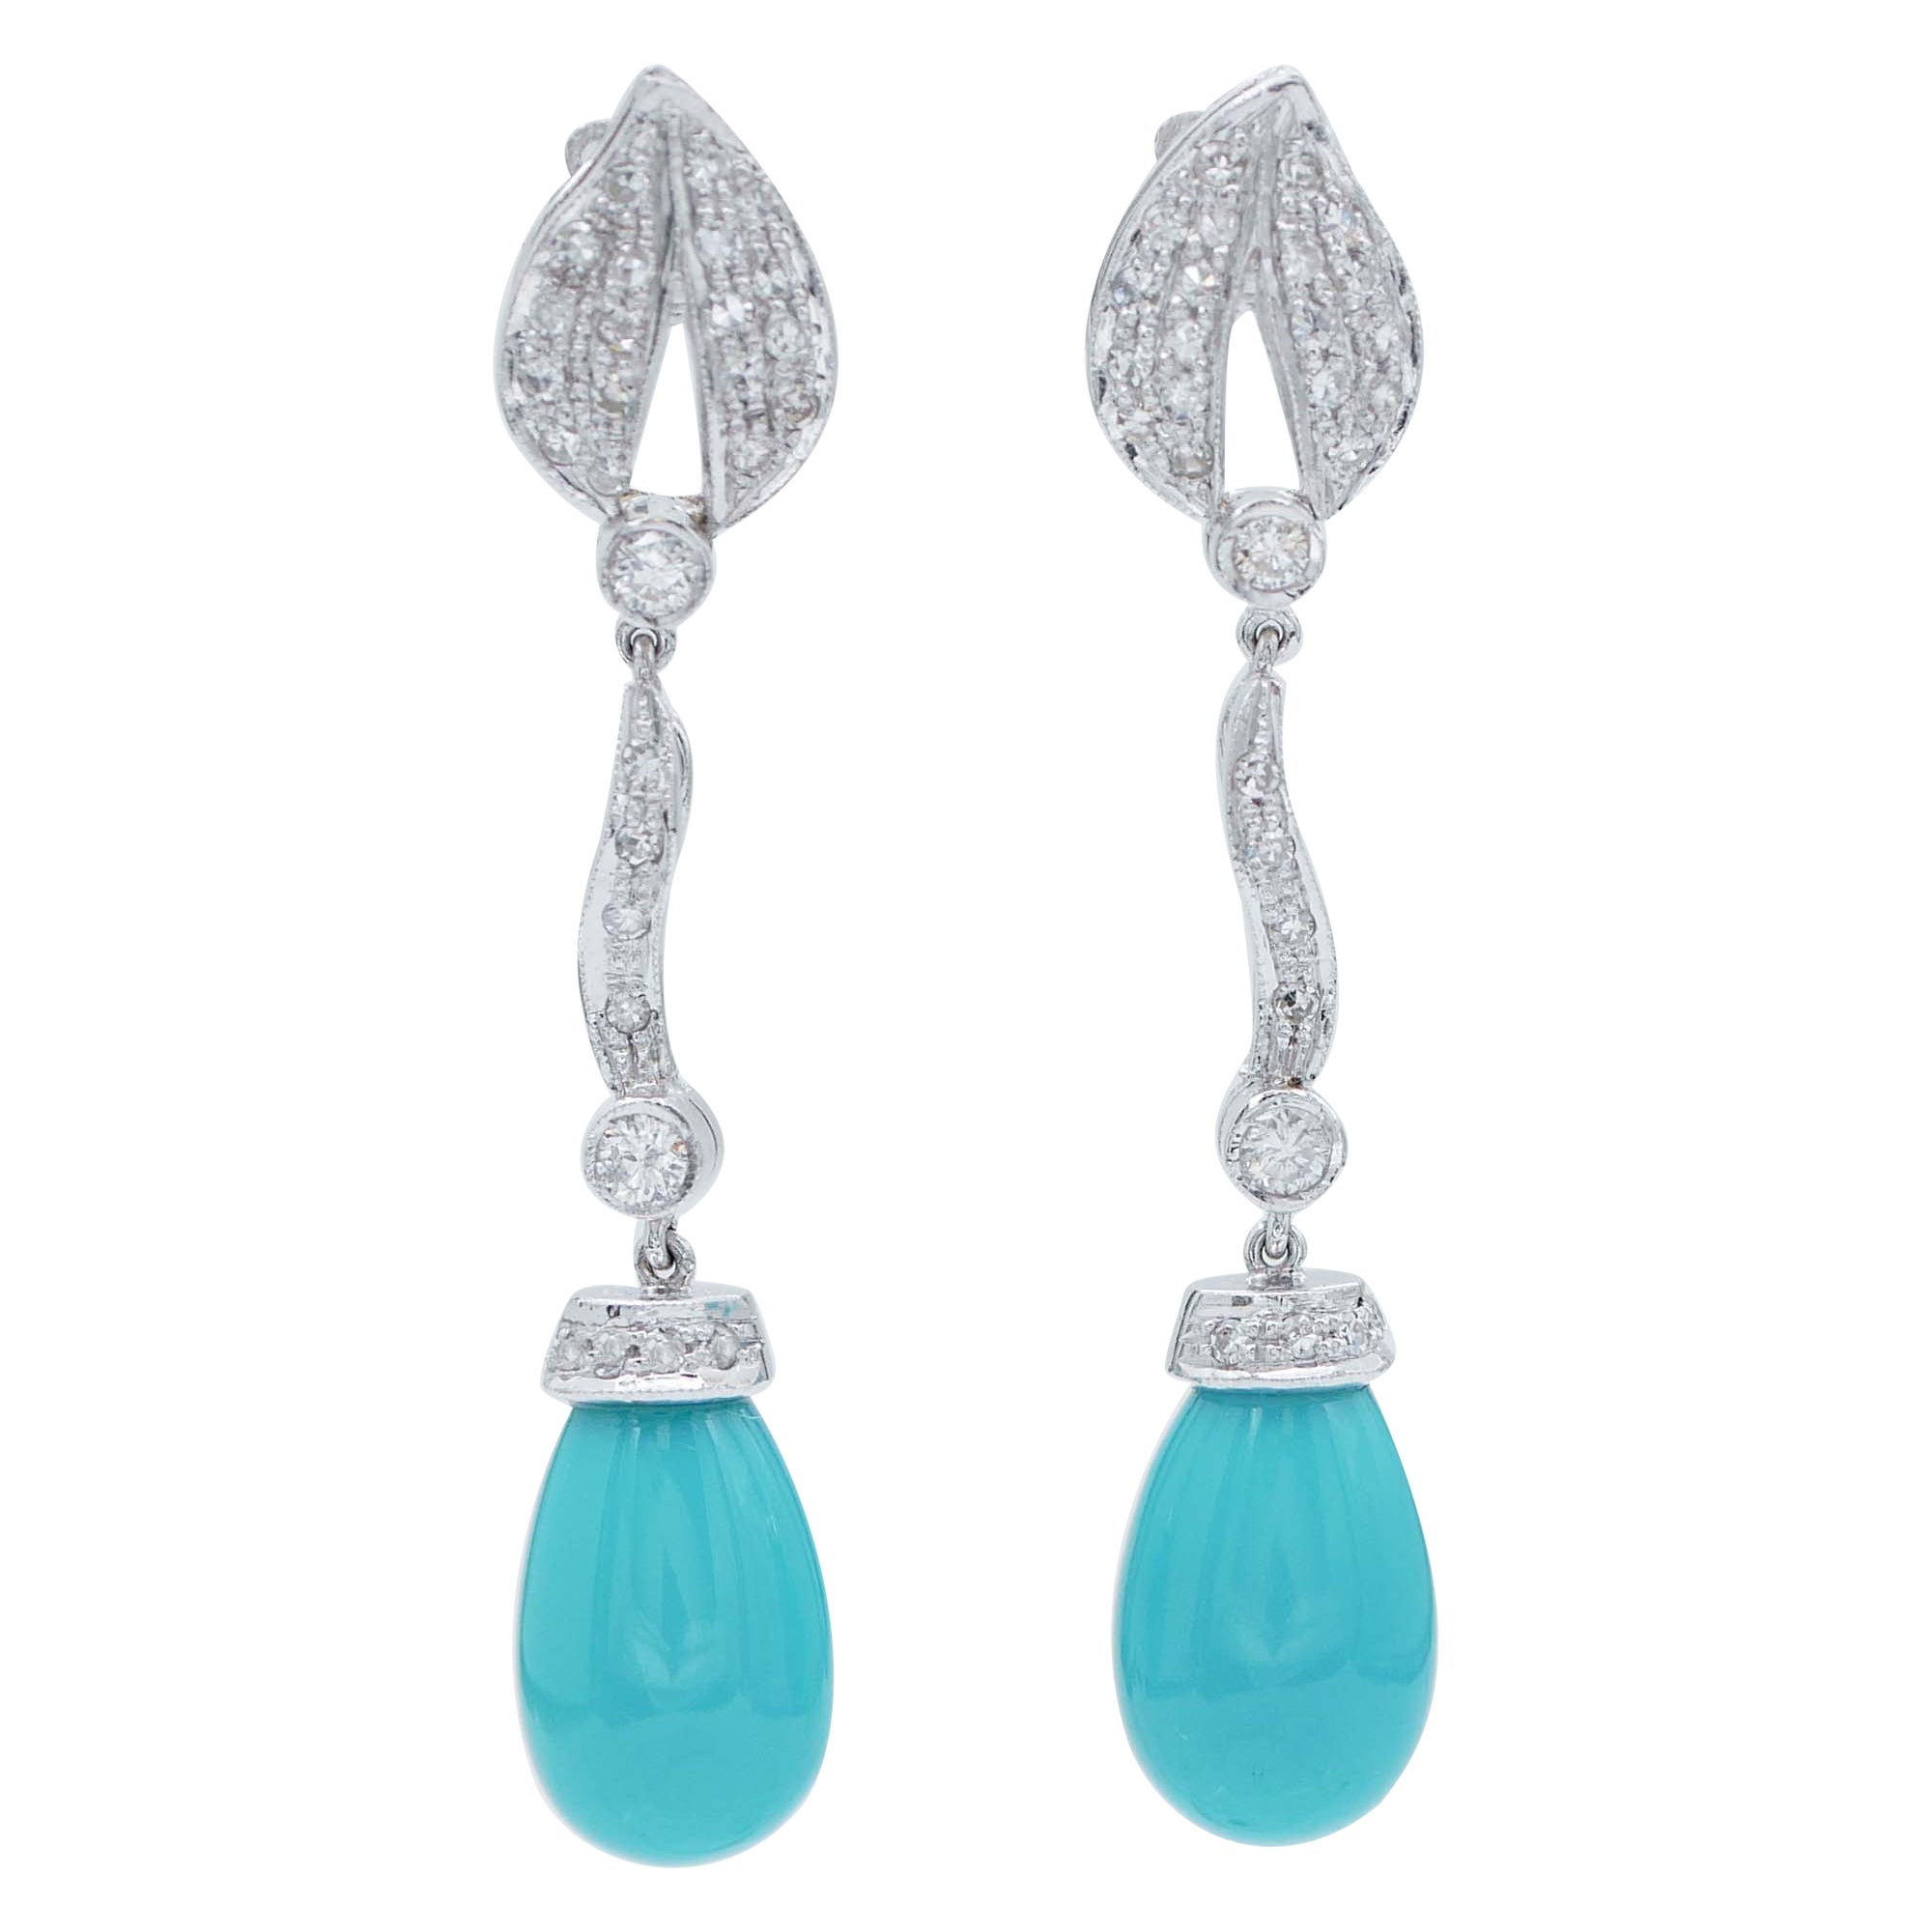 Turquoise, Diamonds, Platinum Dangle Earrings For Sale